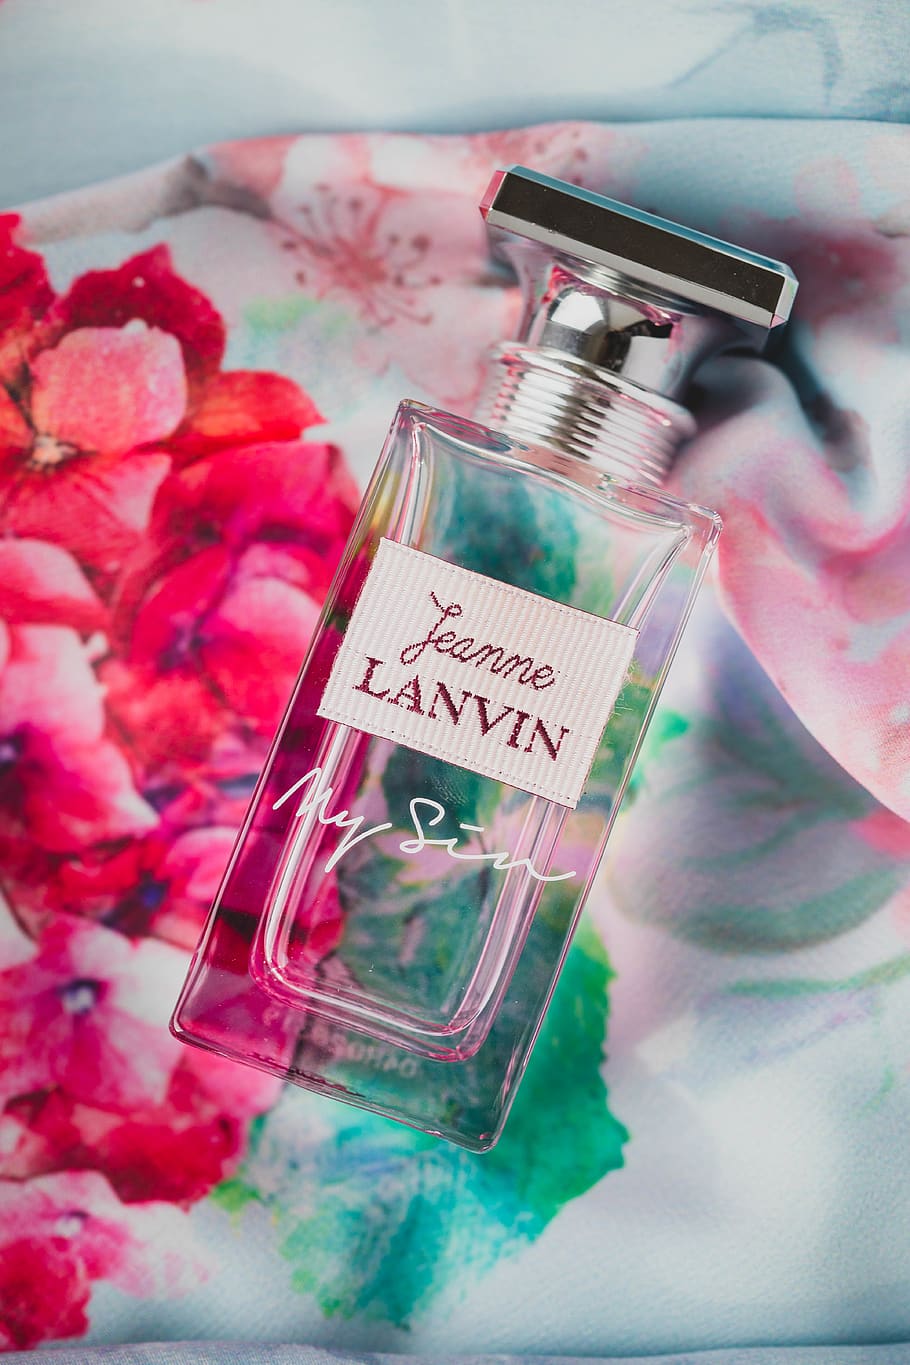 Jeanne Lanvin My Sin Perfume Bottle, aroma, aromatic, close-up